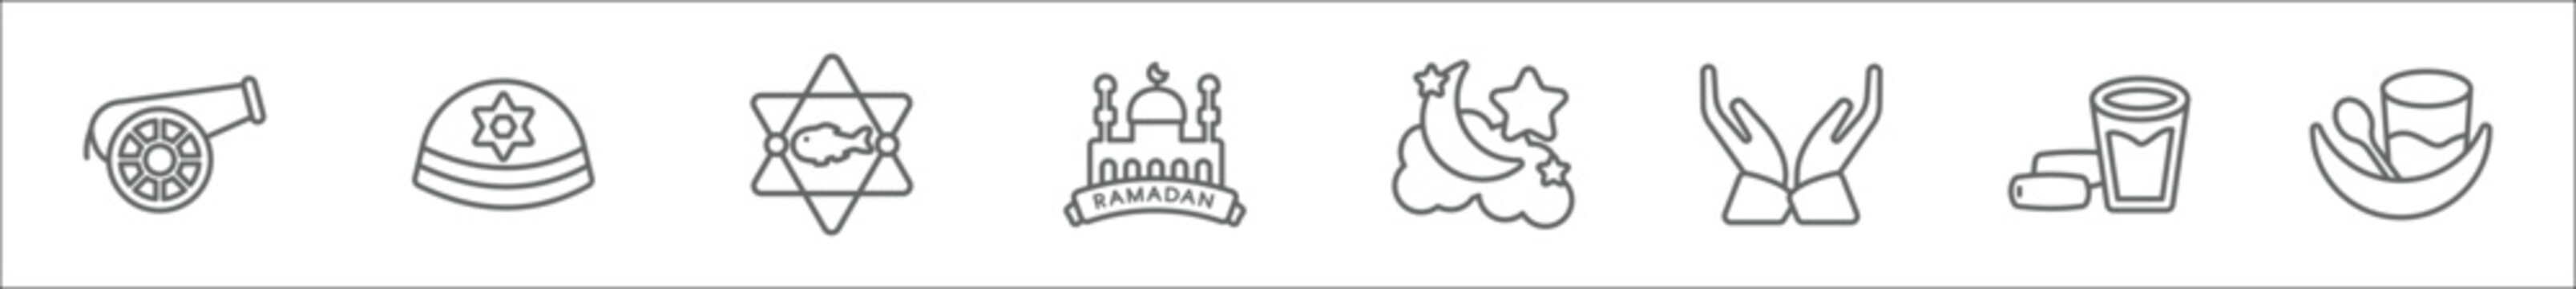 outline set of religion line icons. linear vector icons such as eyd gun, yarmulke, inclined fish, islamic ramadan, ramadan crescent moon, muslim praying hands, ramadan fasting, fasting